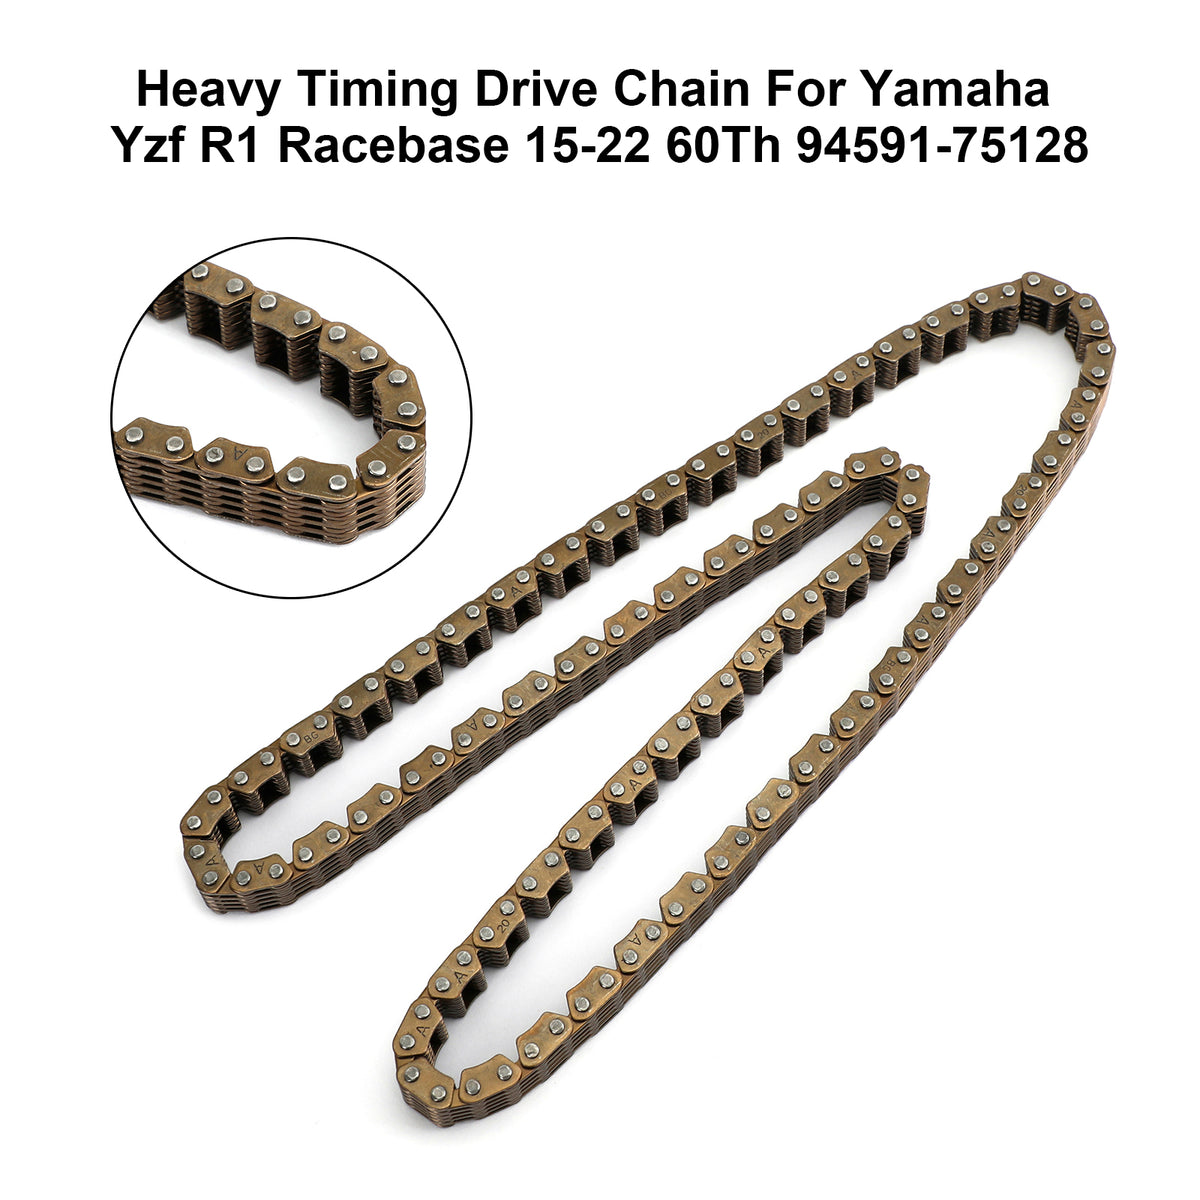 Nuova catena di trasmissione resistente per Yamaha Yzf R1 Racebase 15-22 60esimo 94591-75128 generico